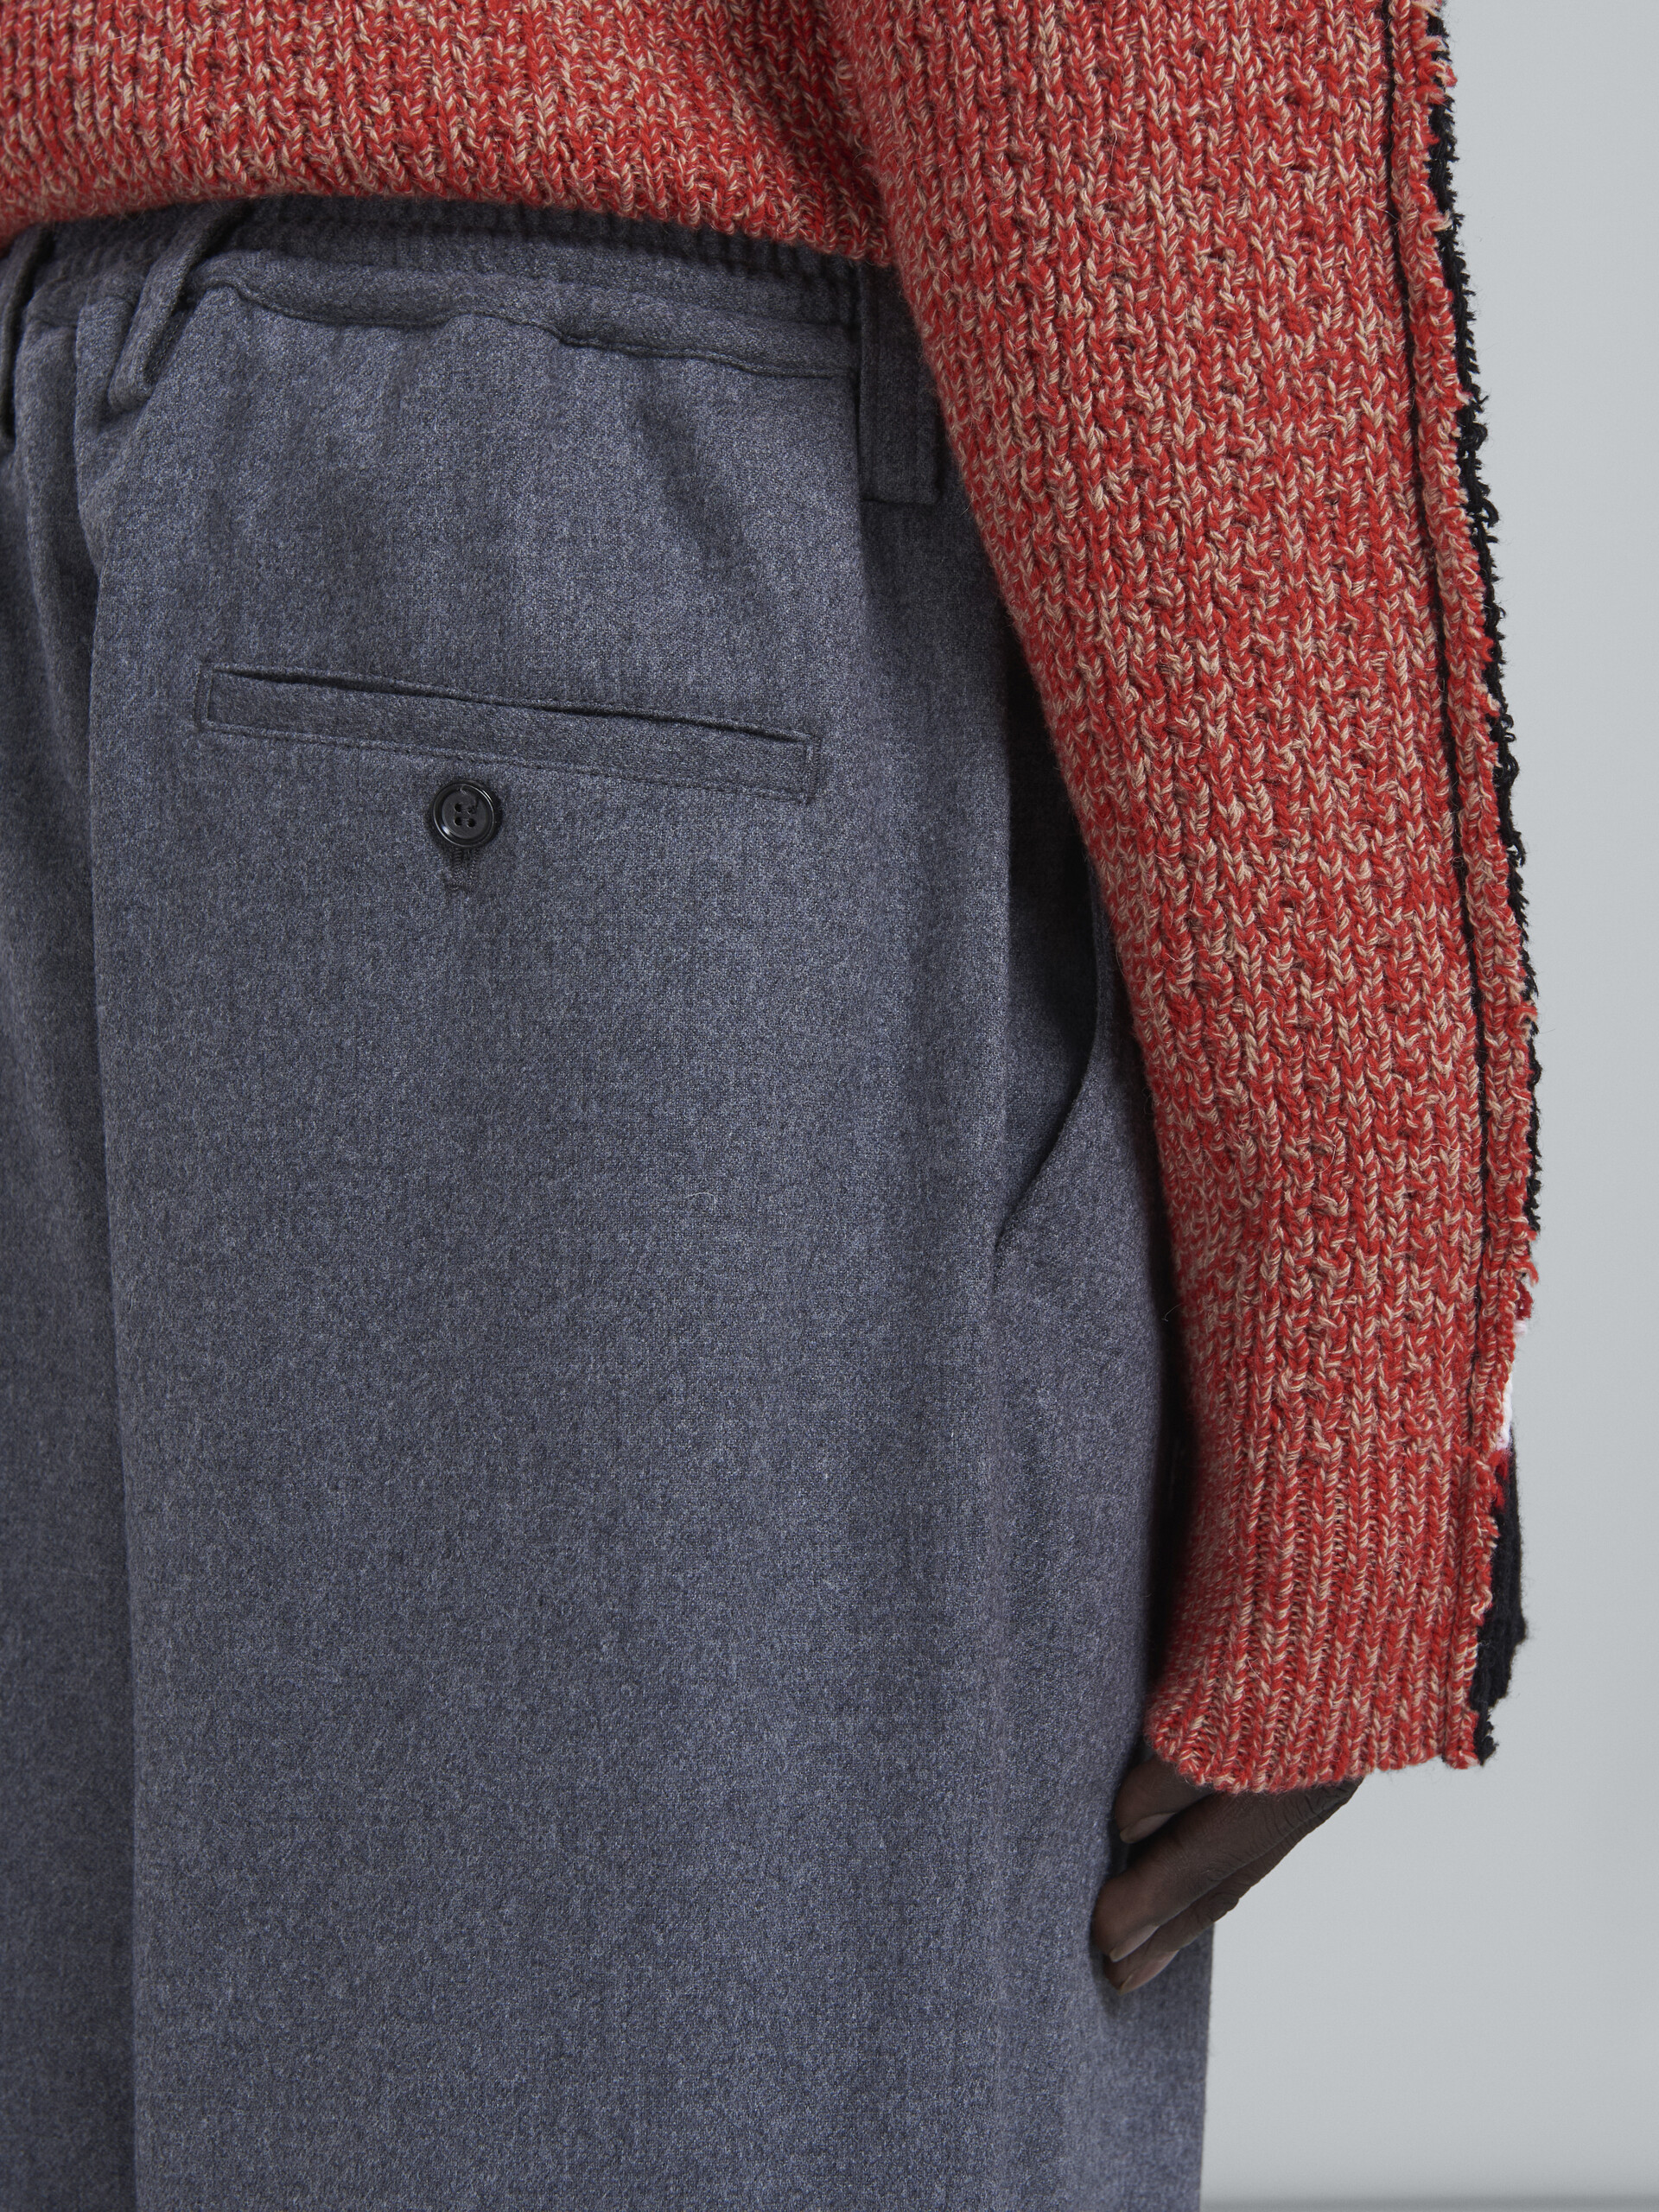 Grey wool cropped pants - Pants - Image 4